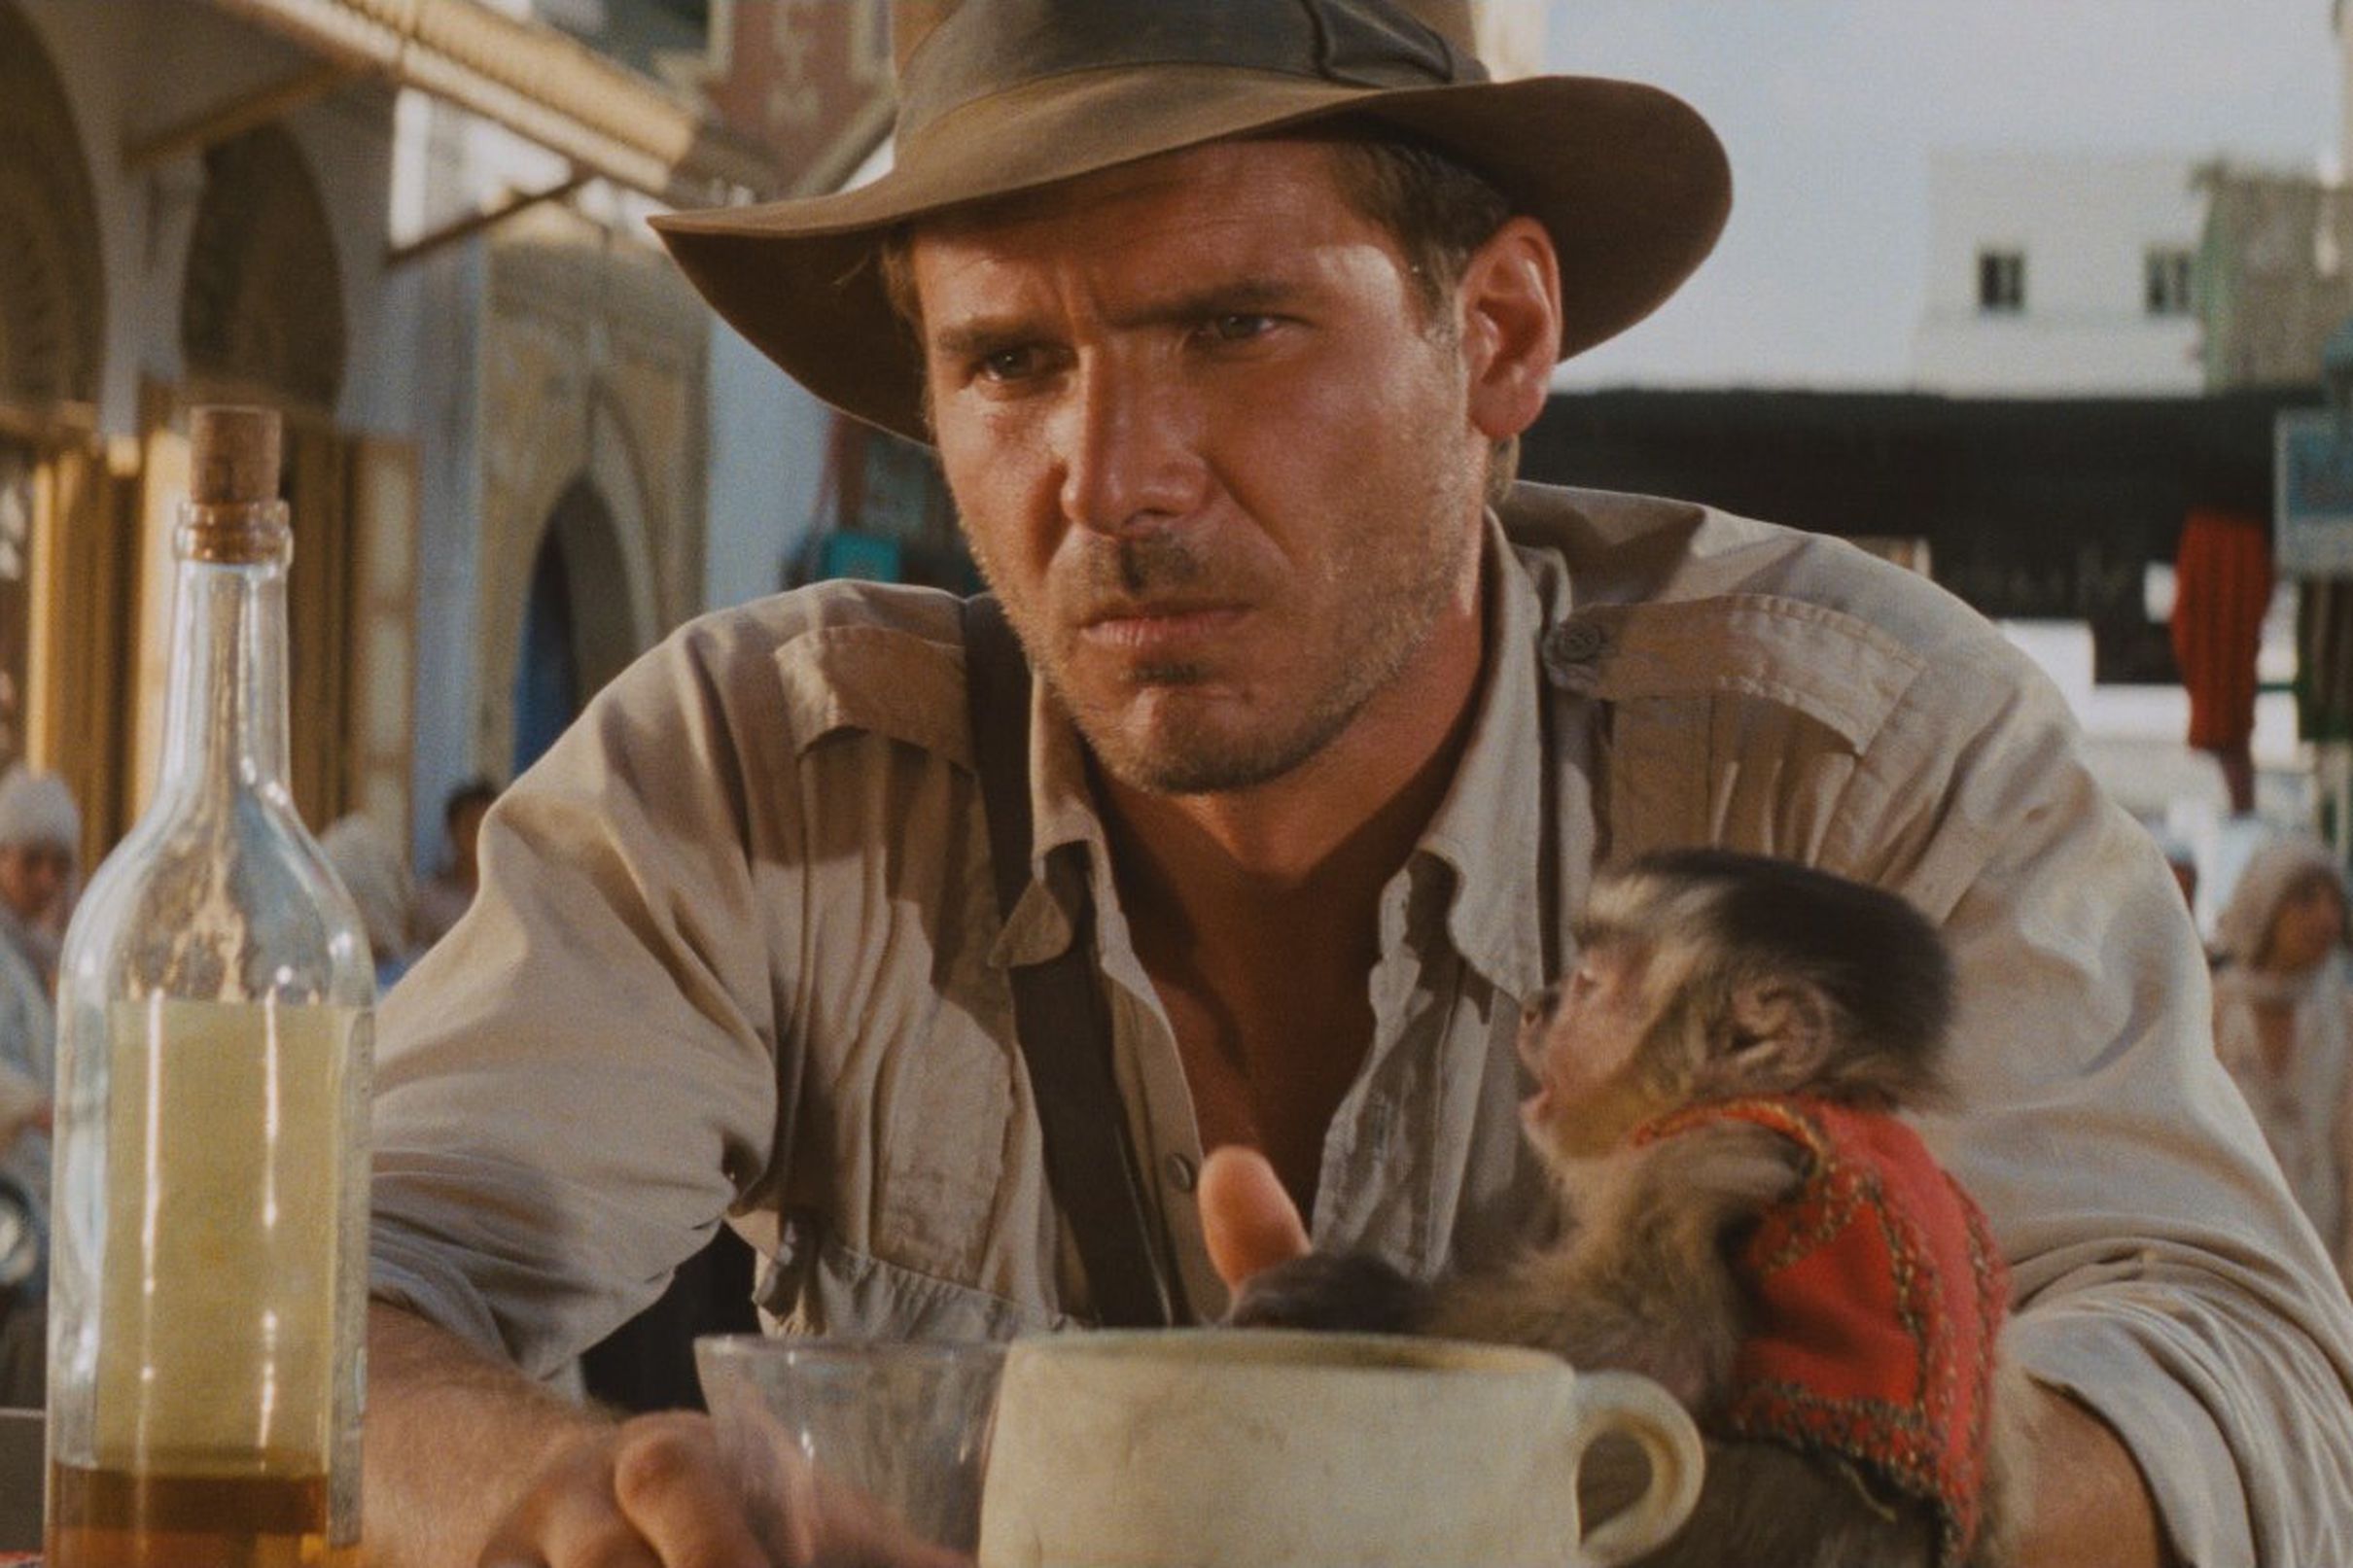 Crystal Skull writer to return for Indiana Jones 5 - The Verge